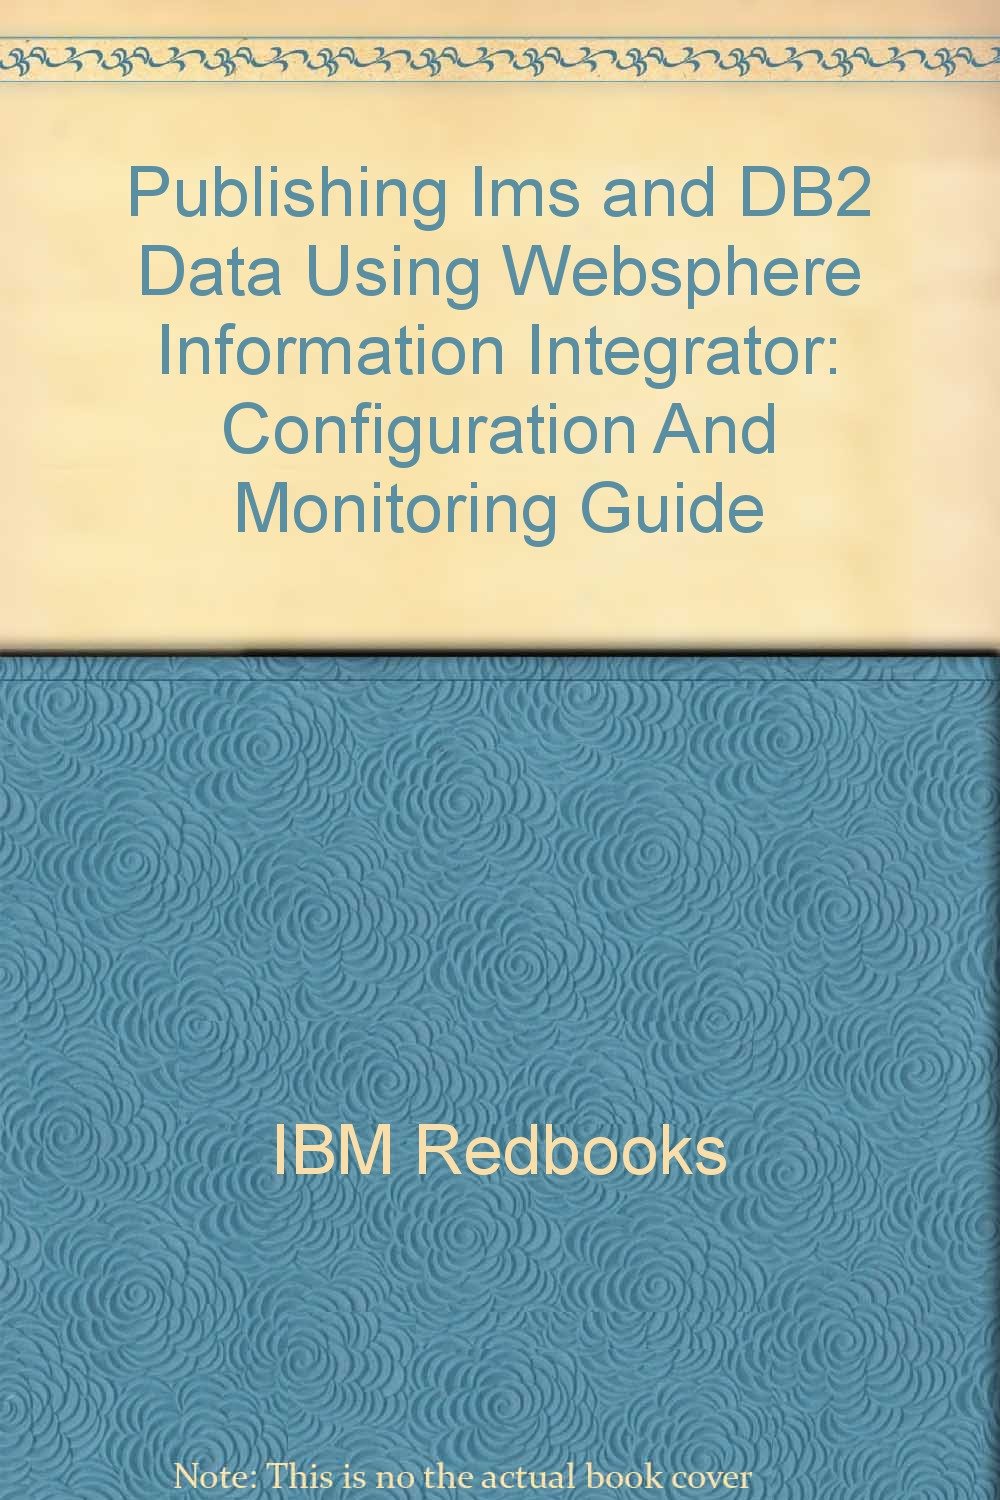 使用Websphere Information Integrator发布Ims和DB2数据：配置和监视指南